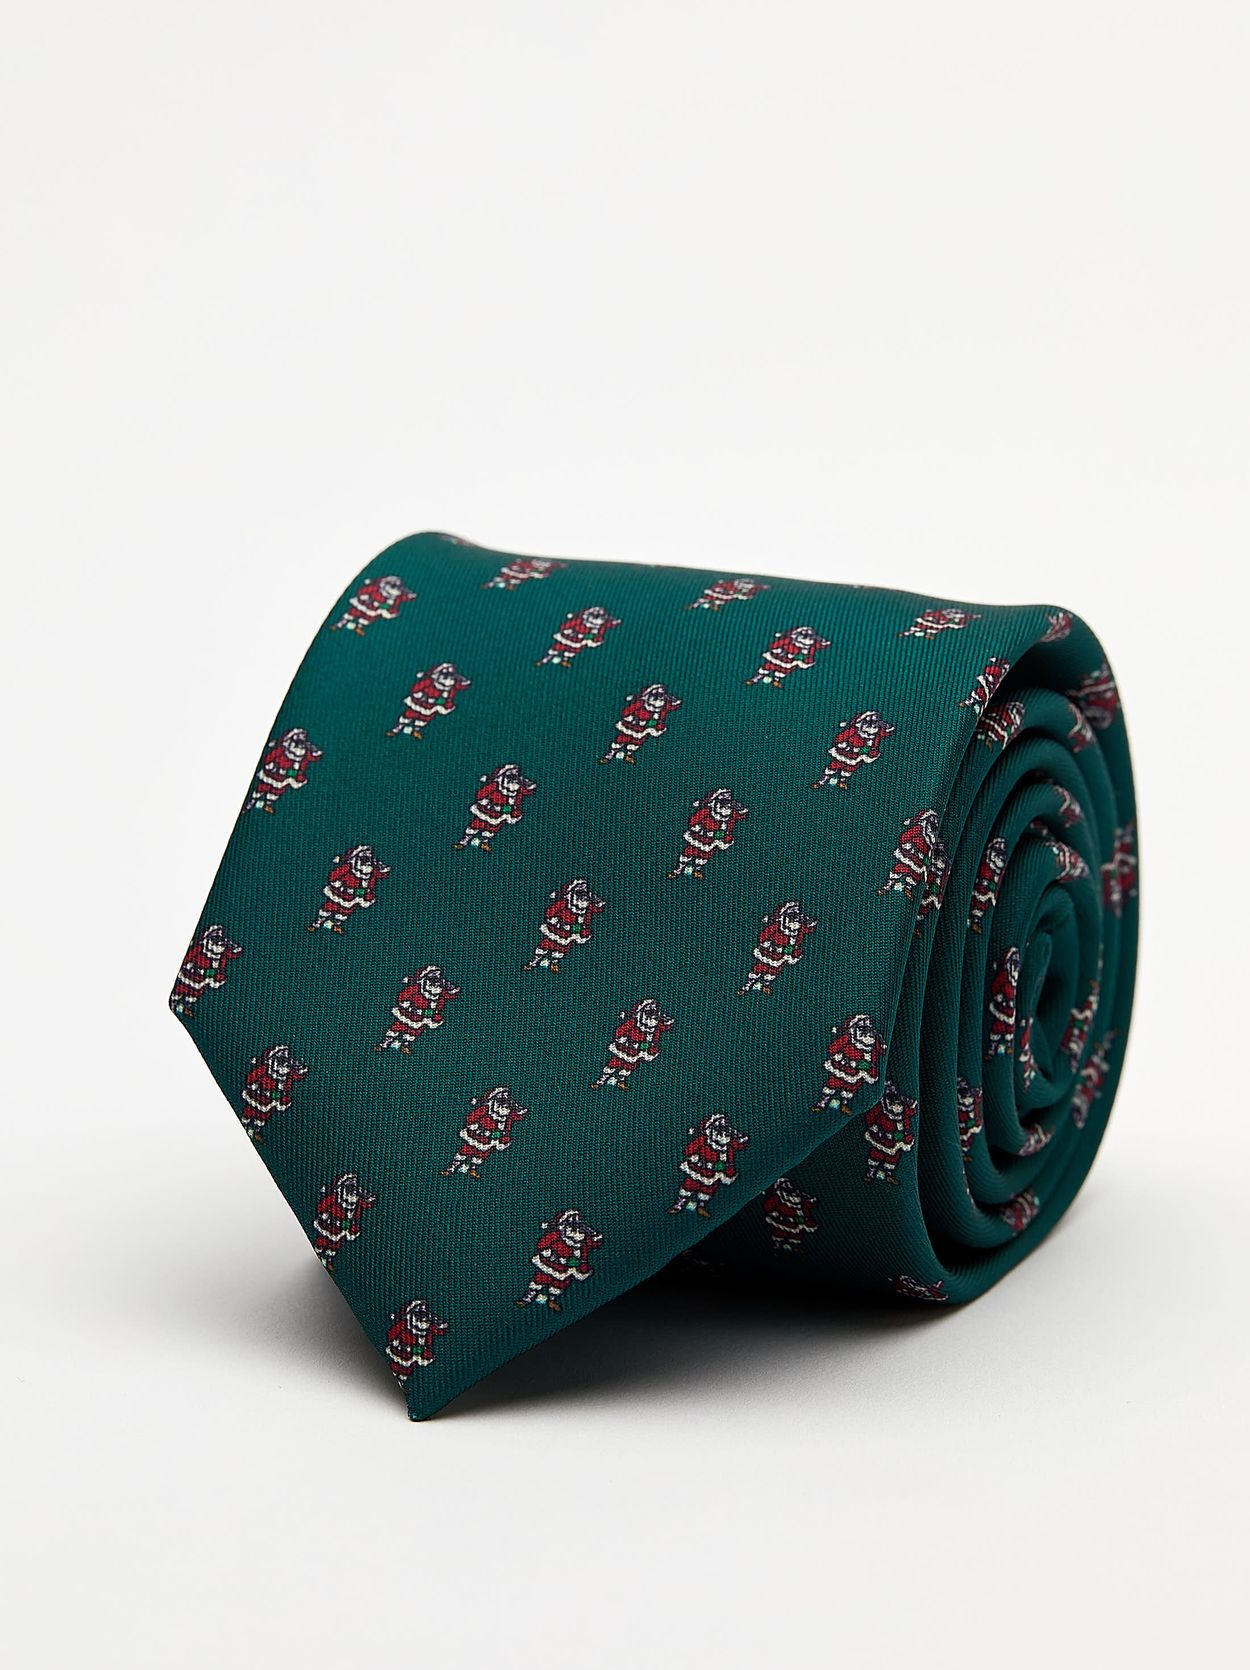 Green Christmas Tie